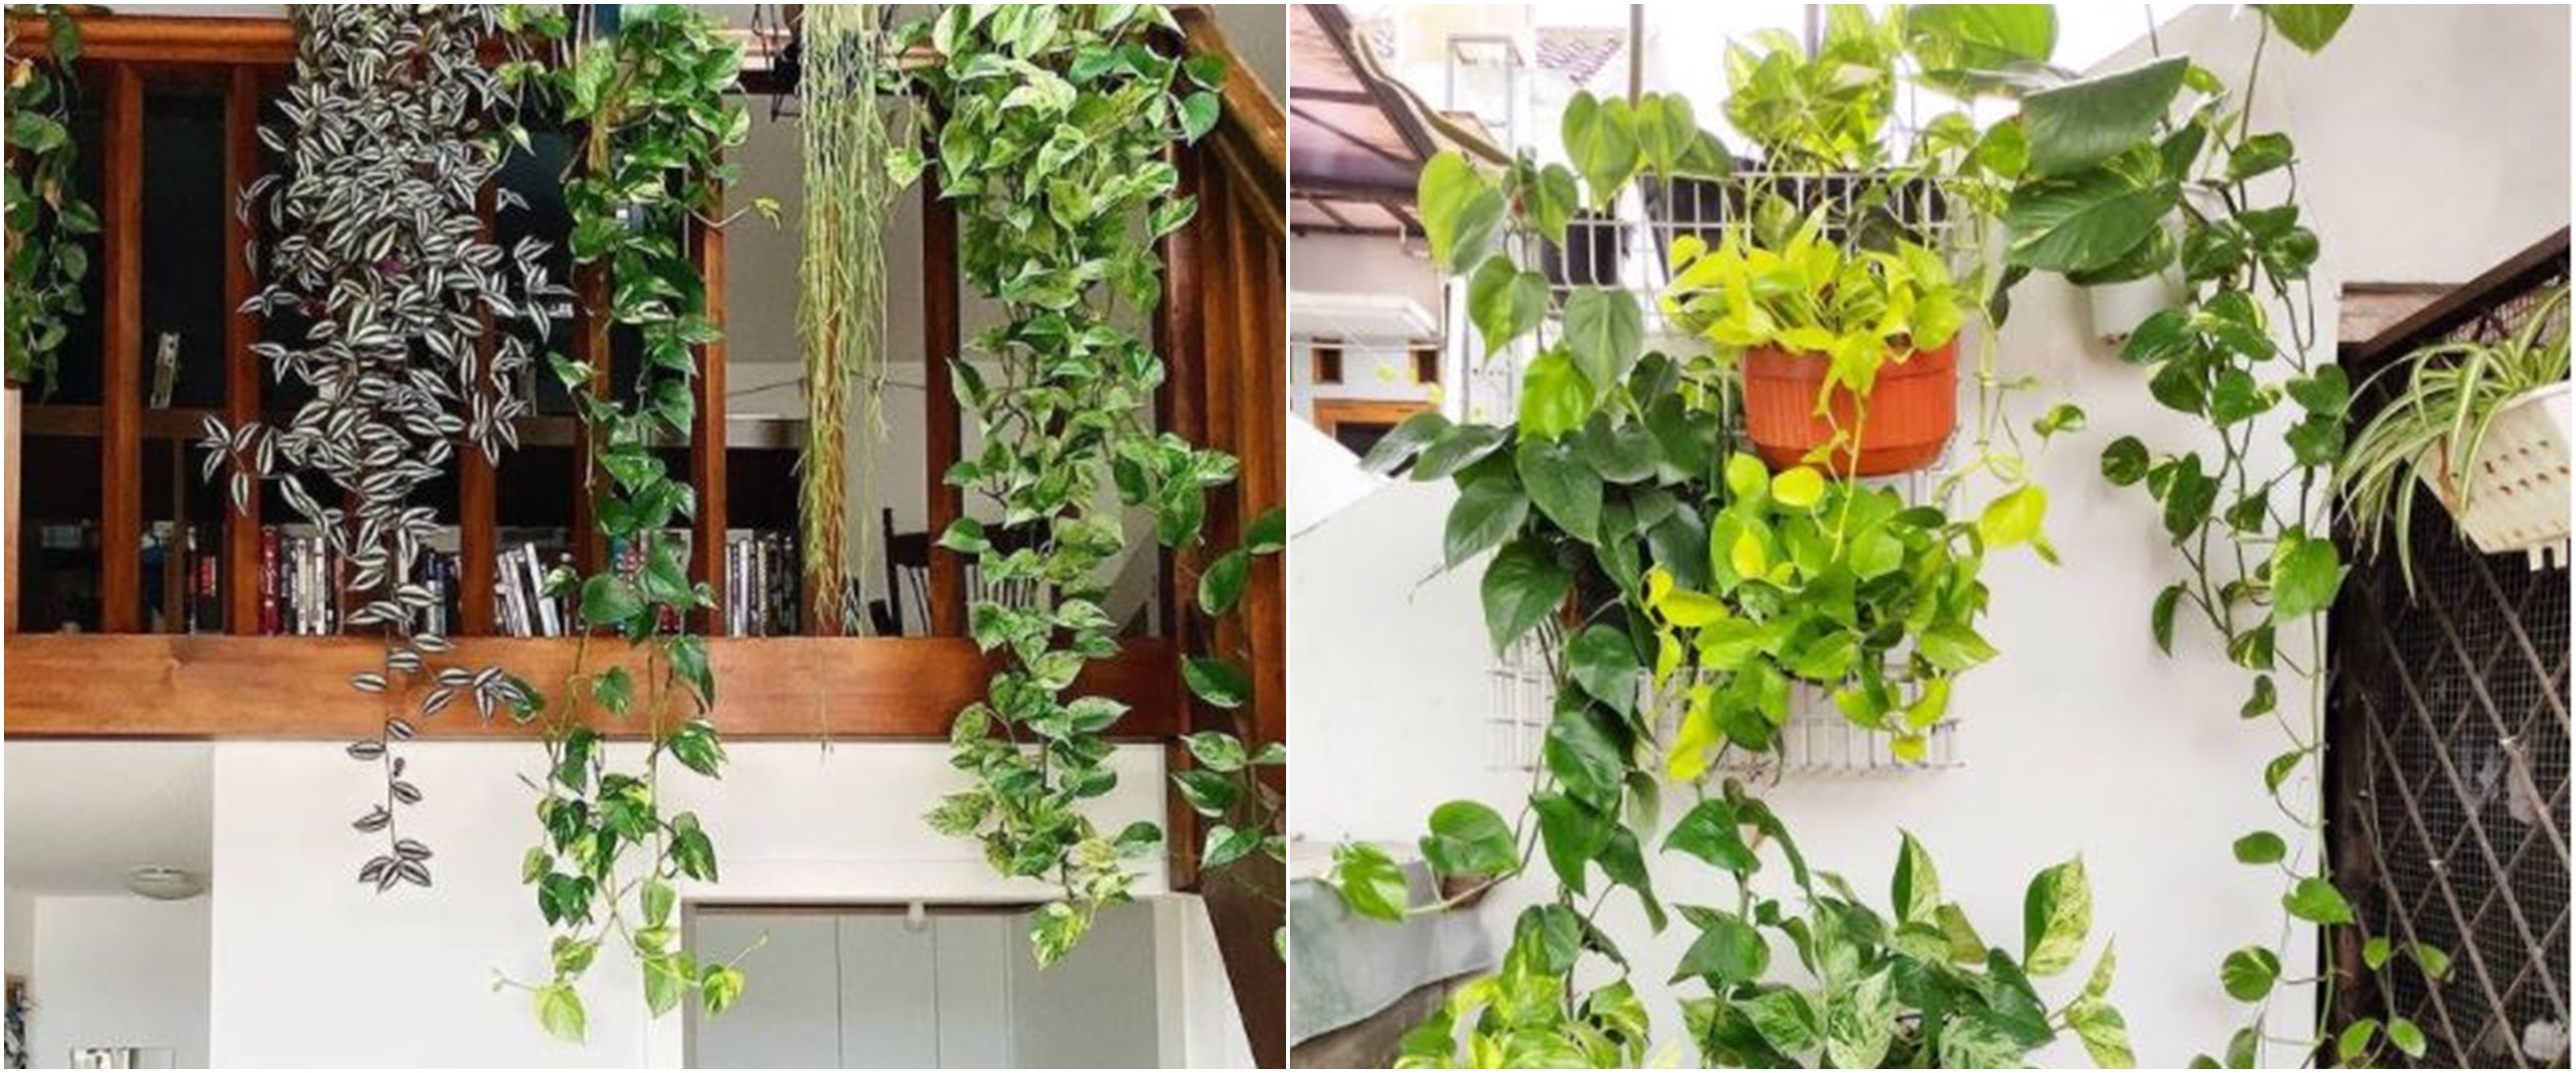 10 Jenis tanaman hias gantung untuk dekorasi, bikin rumah jadi ca - Jenis Tanaman Hias Gantung Dalam Ruangan